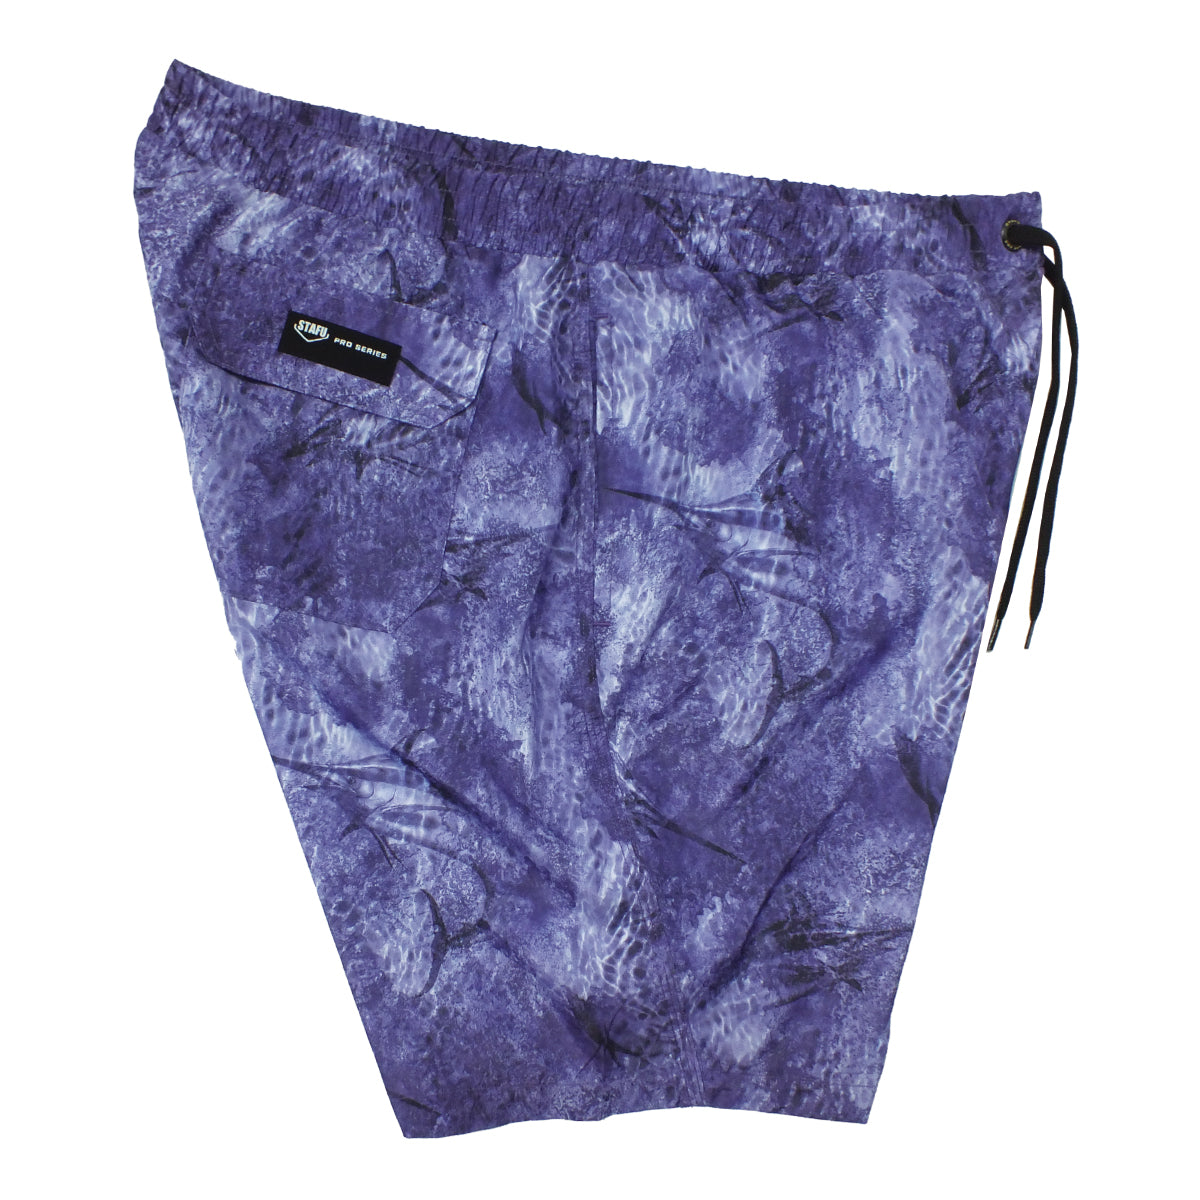 Salty Dog Swim Short - Marlin Mania - Purple - Stafu Pro Series